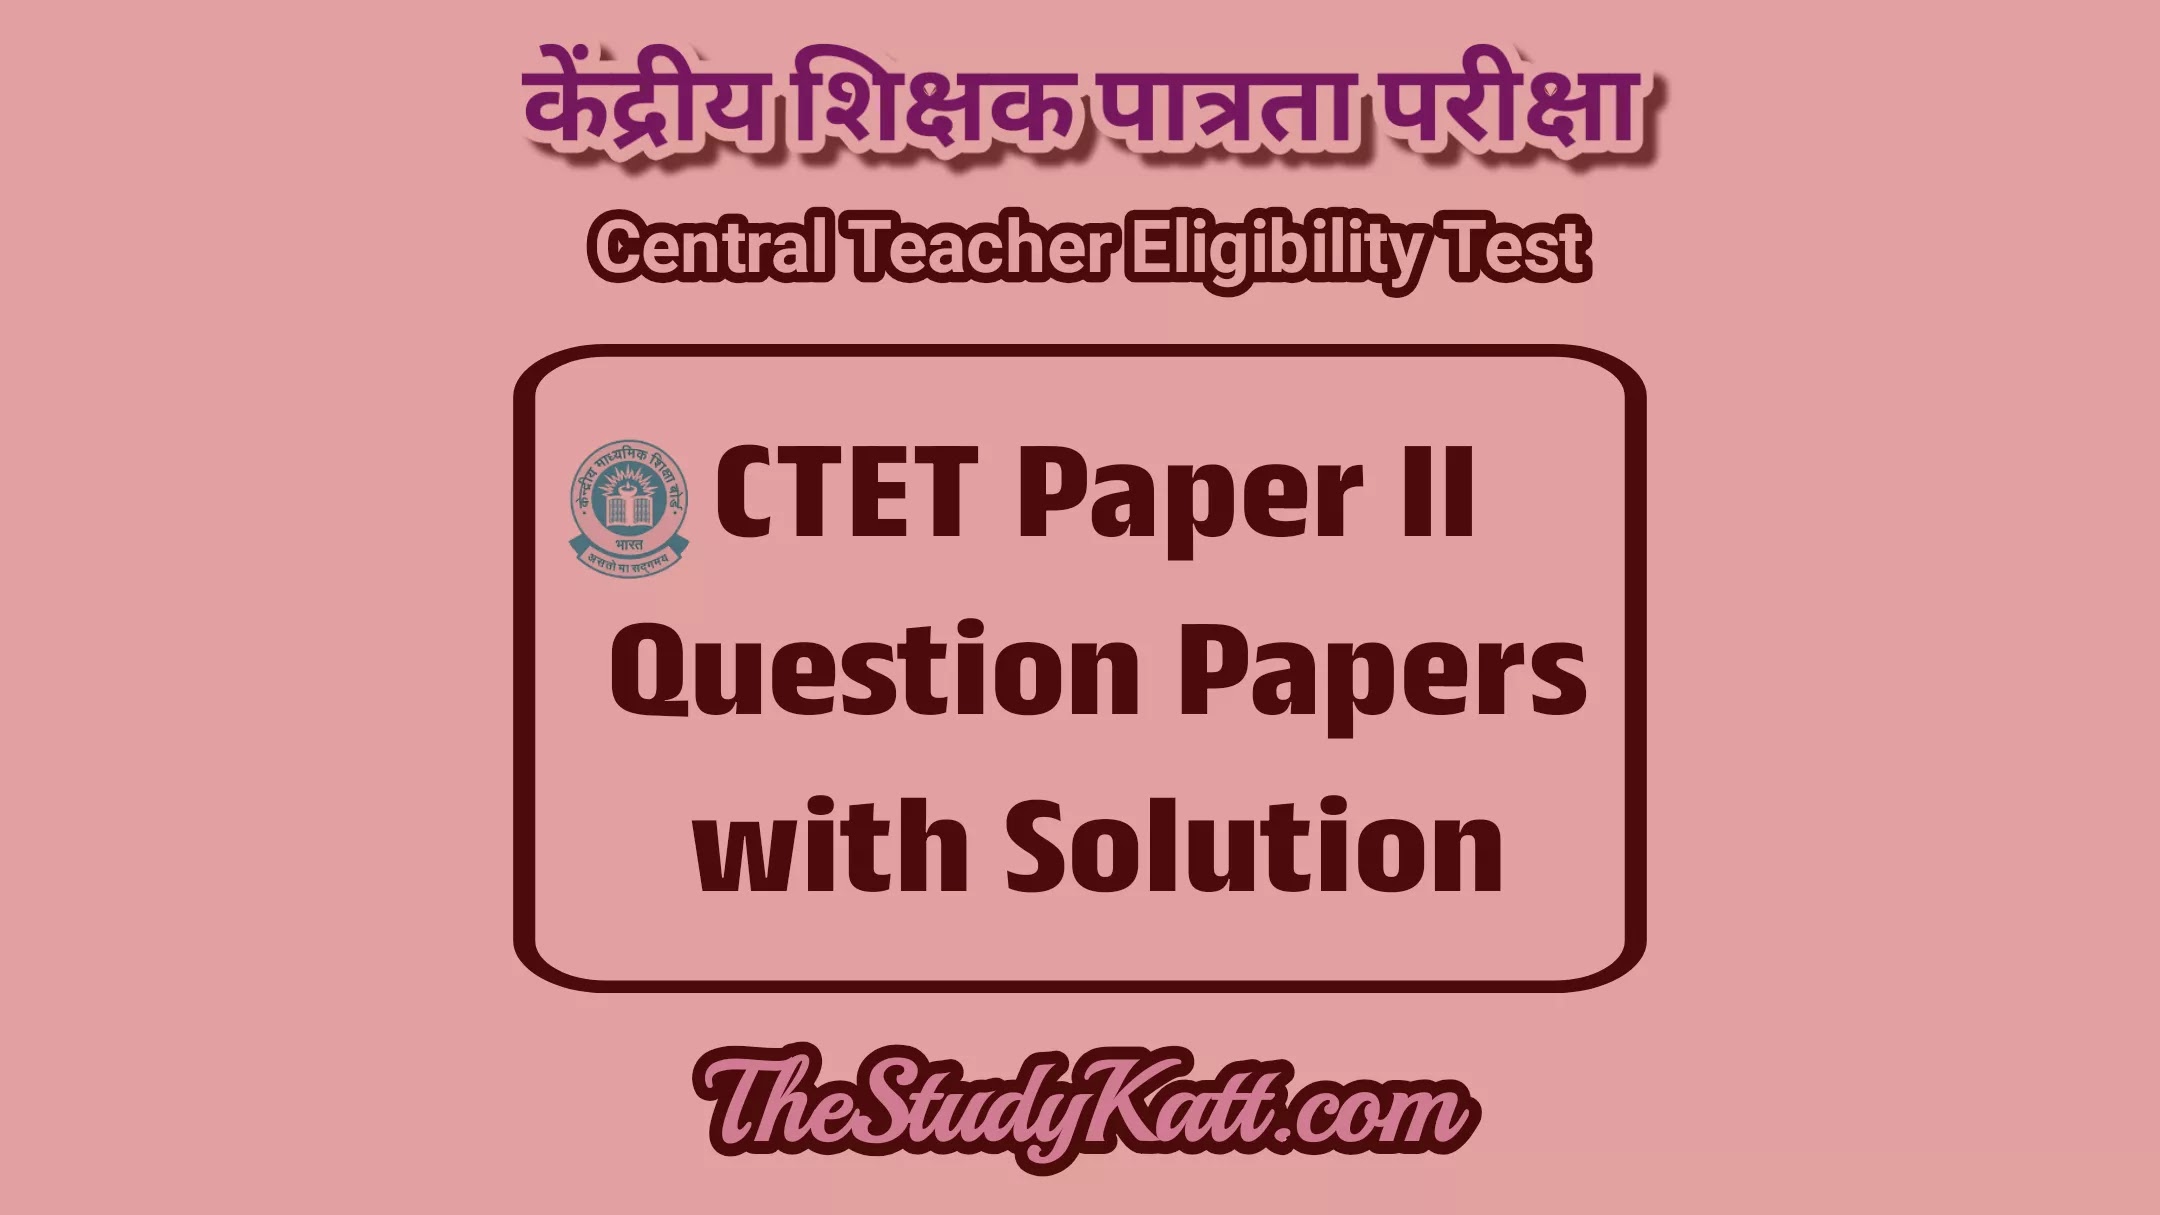 CTET Dec 2018 Question Papers with Solutions - Paper 2 | CTET डिसेंबर २०१८ प्रश्नपत्रिका स्पष्टीकरनासह - पेपर २